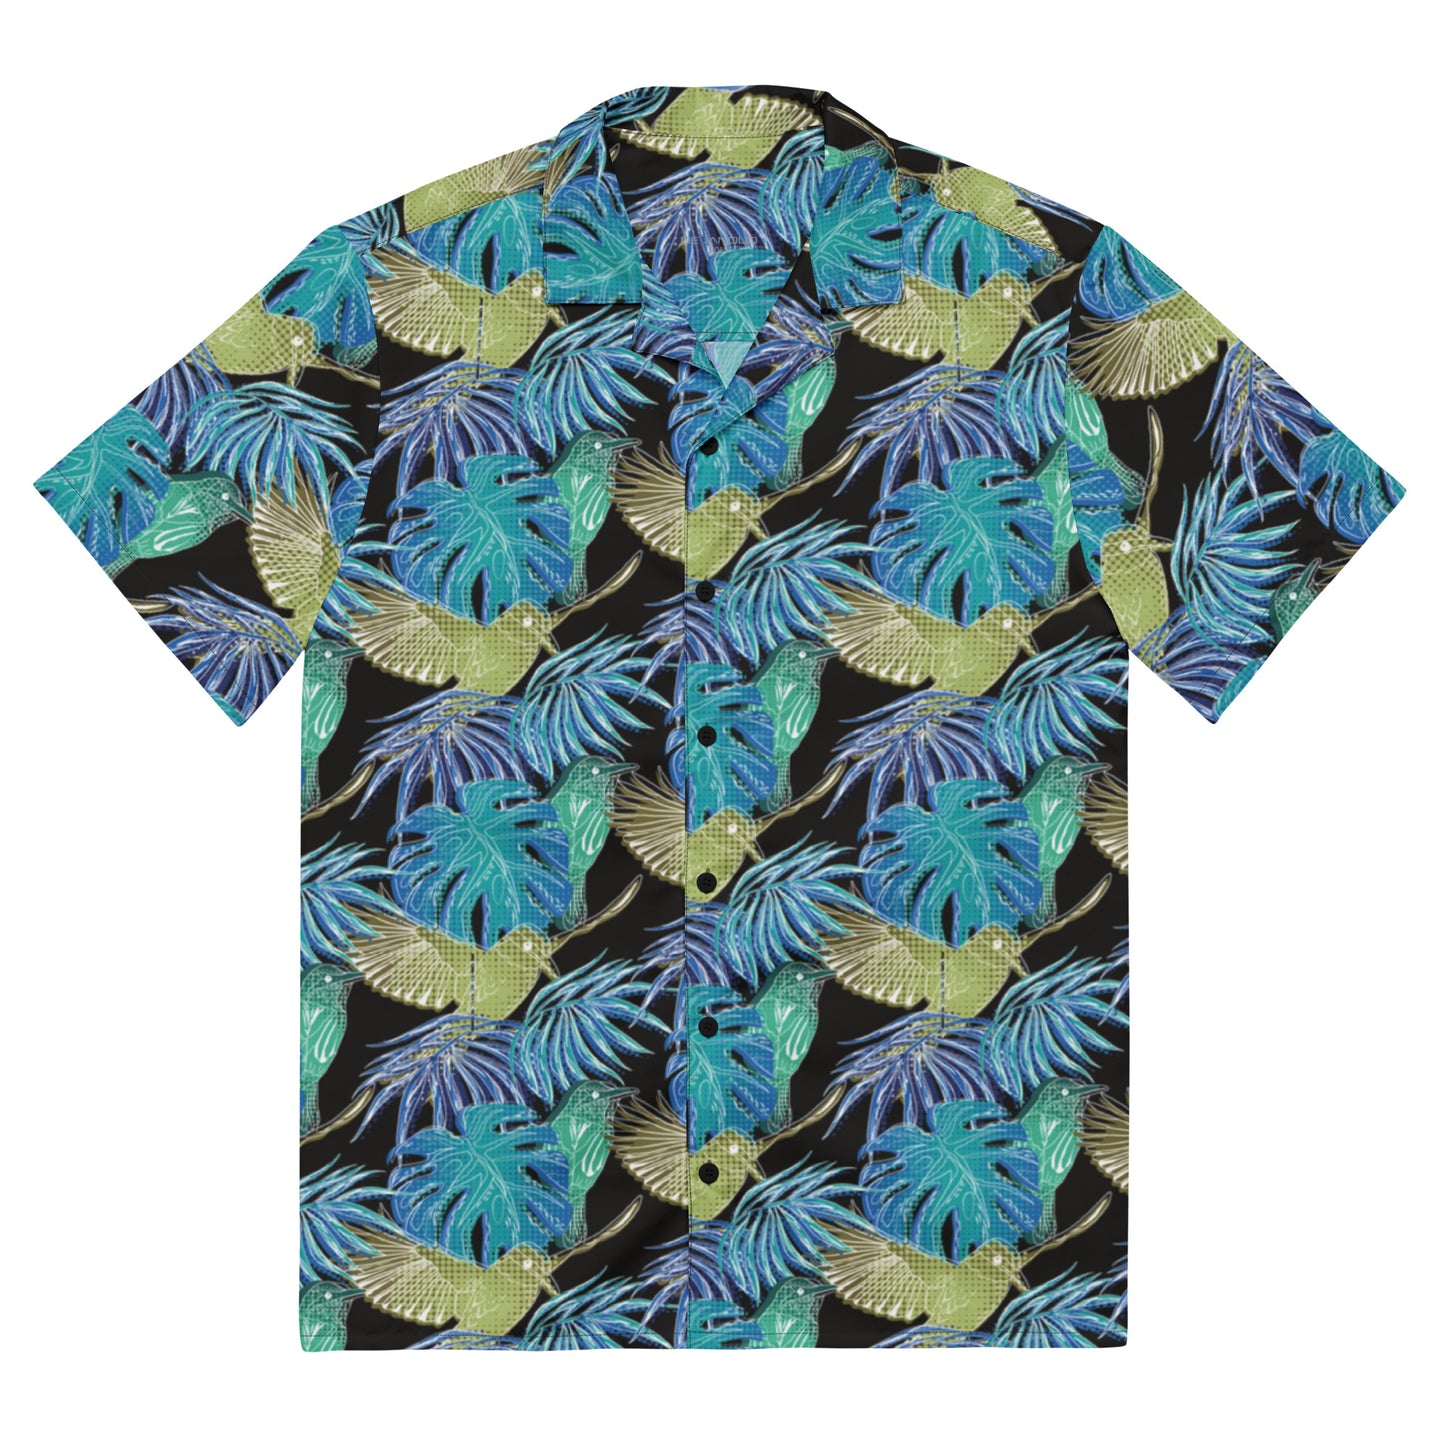 Fairway Shirt - Flower P s